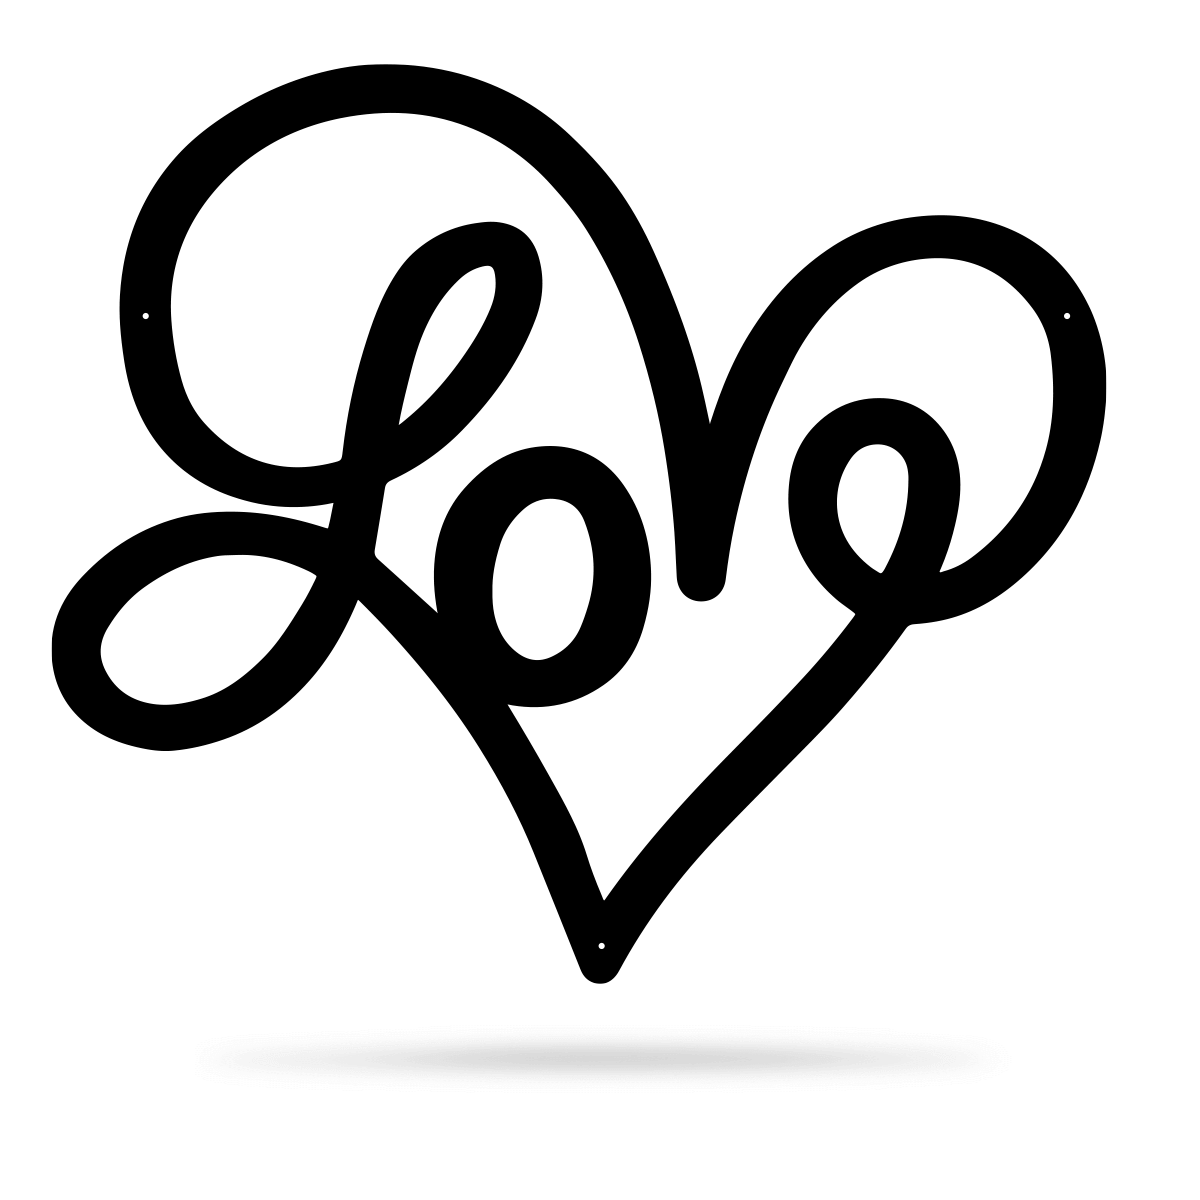 love heart logos